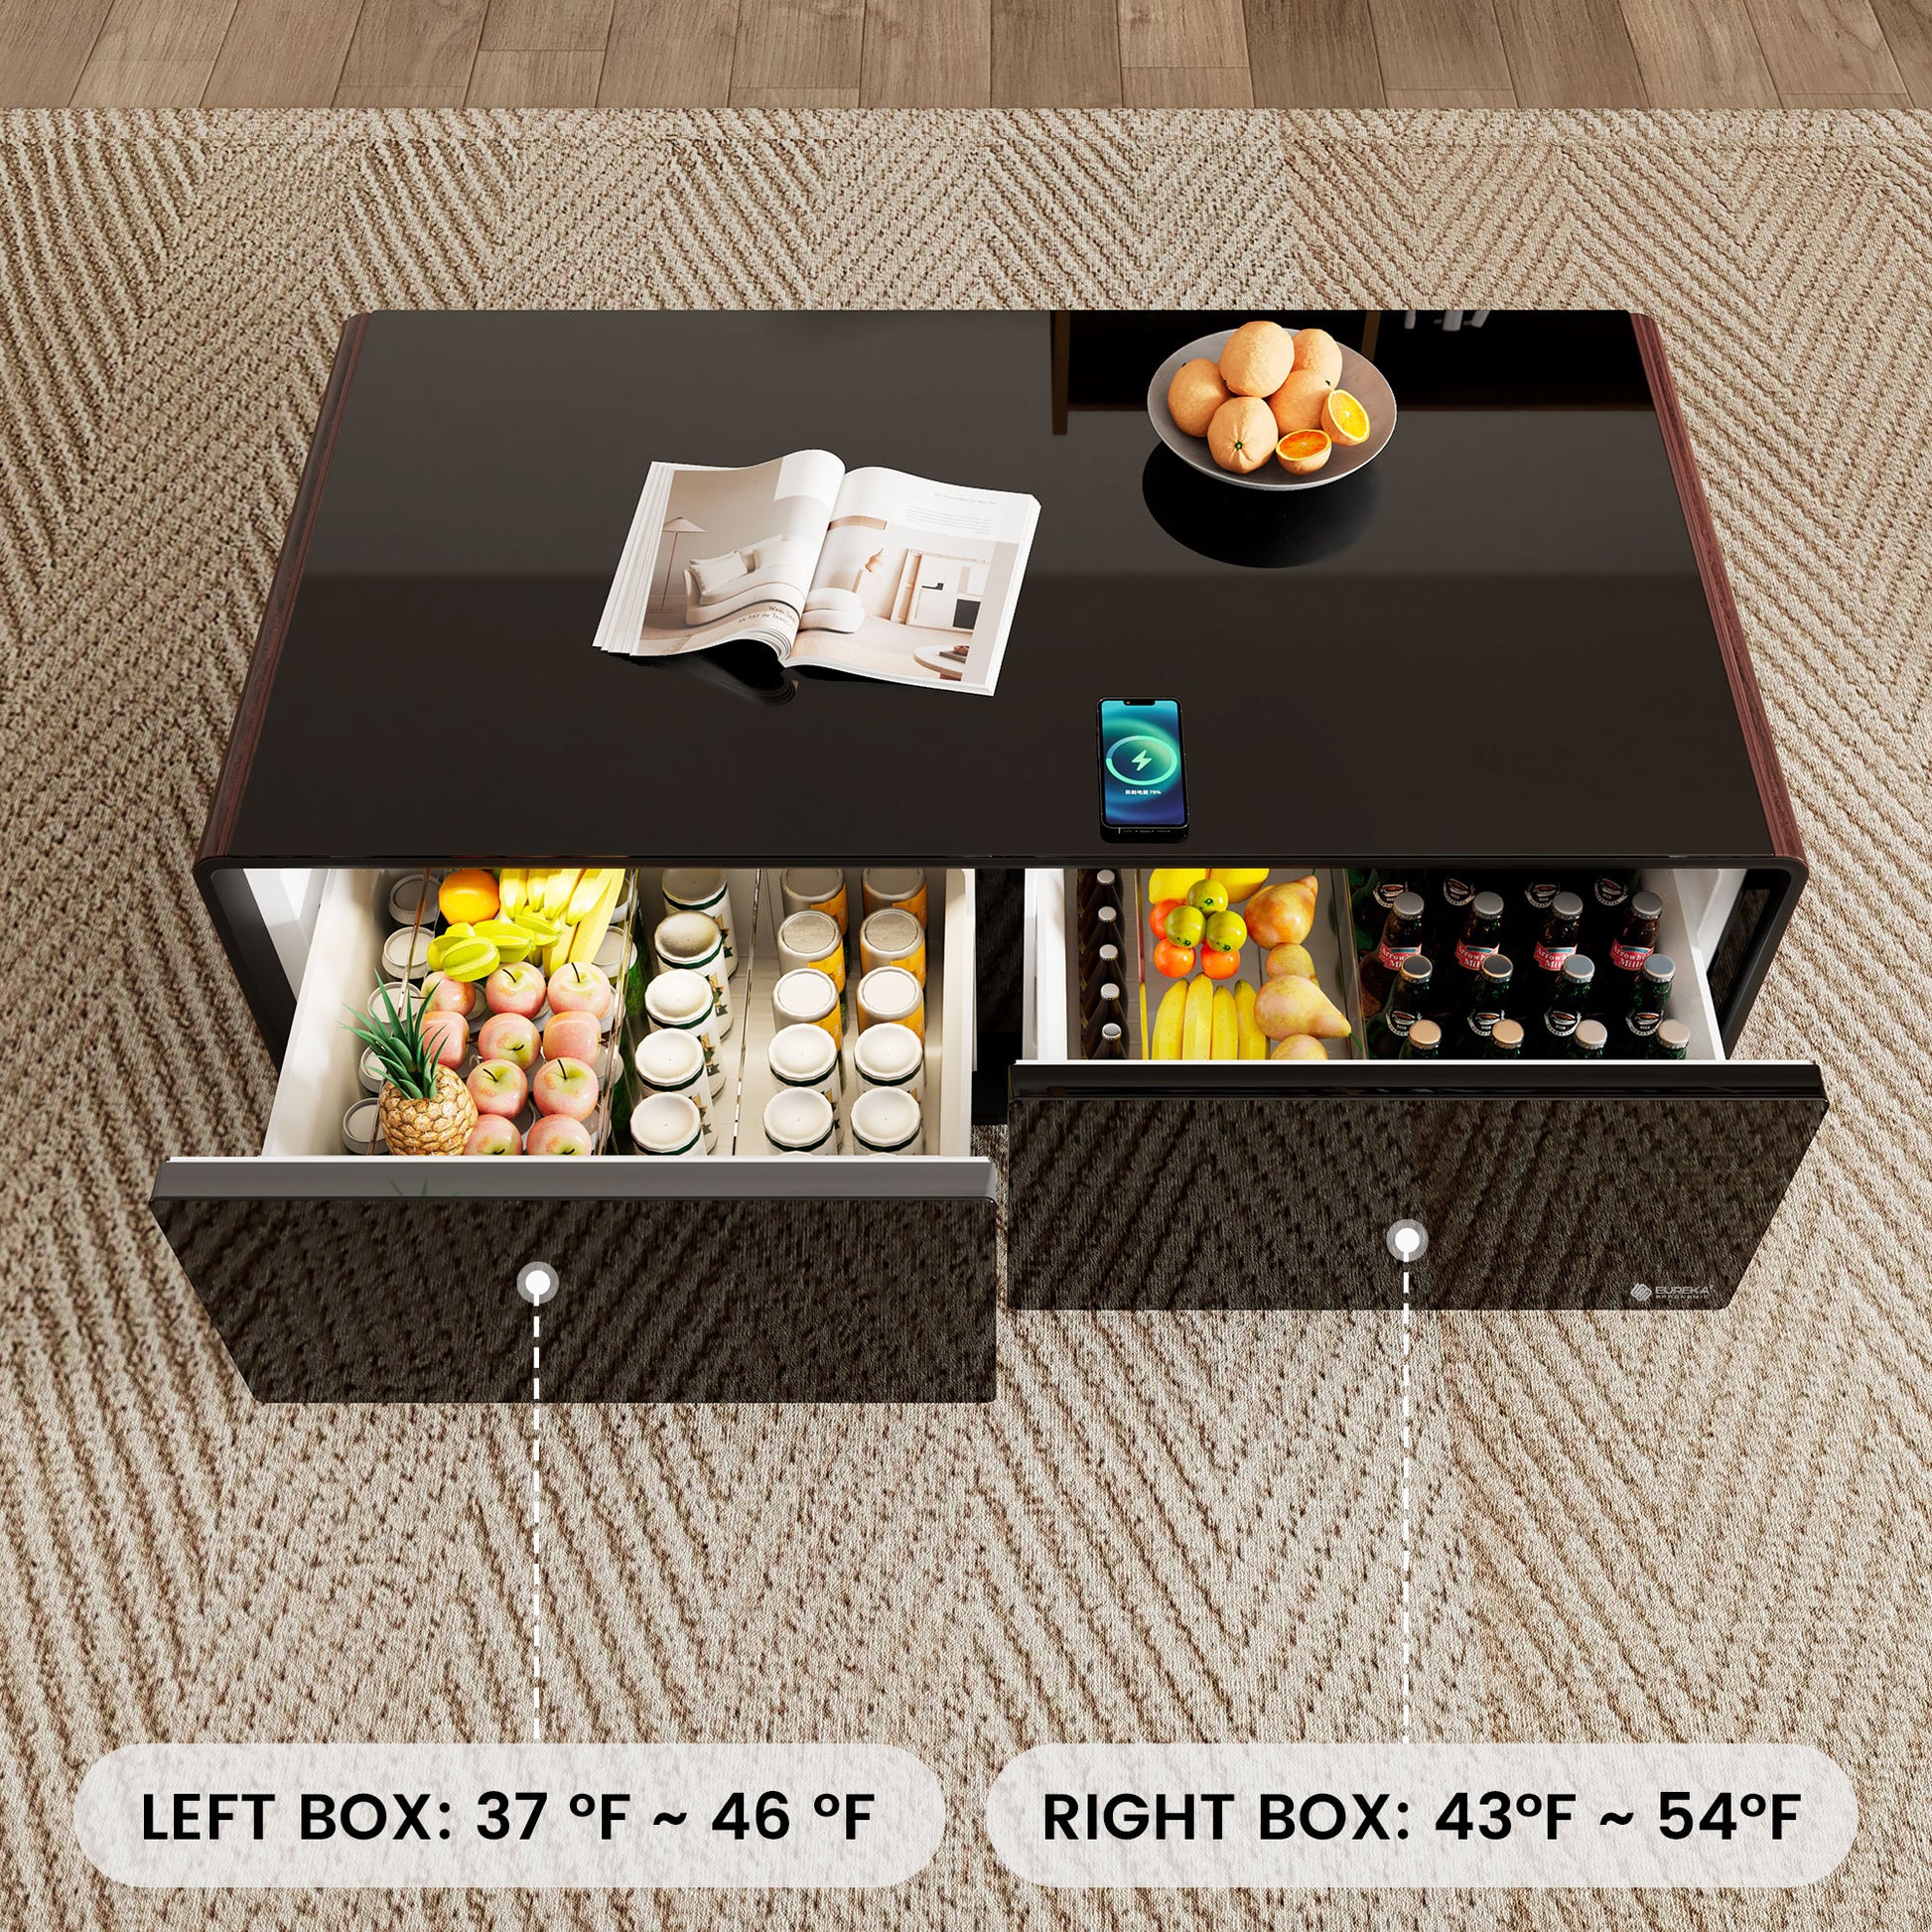 50 inch Walnut Woodgrain Style Smart Fridge Coffee Table with Bluetooth Speakers, Flexible Temperature Control Range